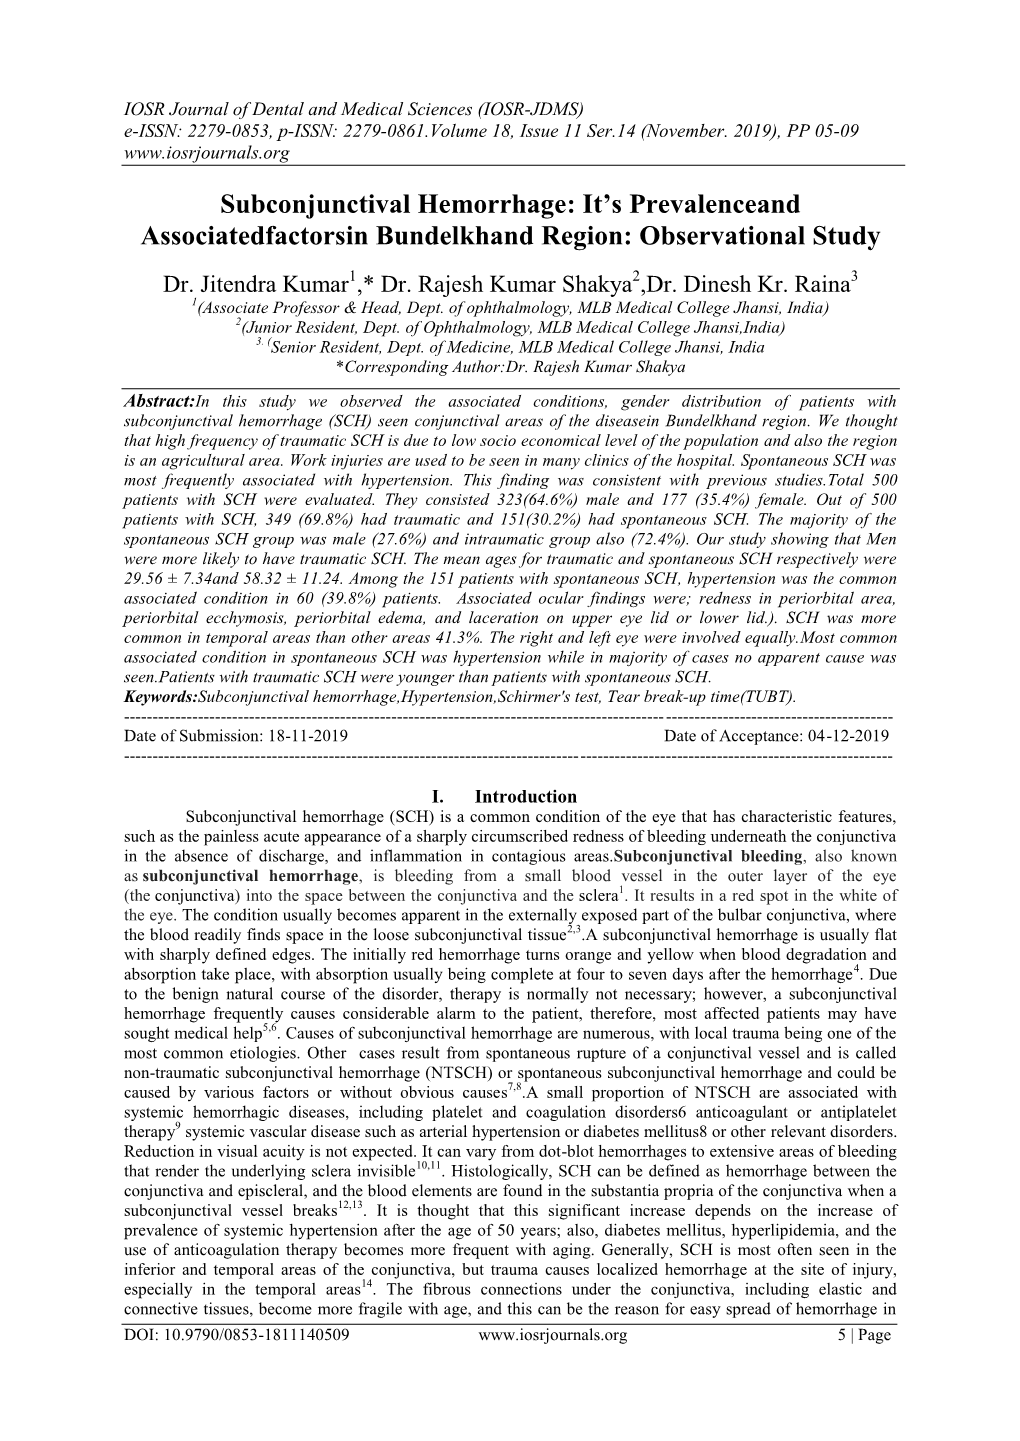 Subconjunctival Hemorrhage: It’S Prevalenceand Associatedfactorsin Bundelkhand Region: Observational Study